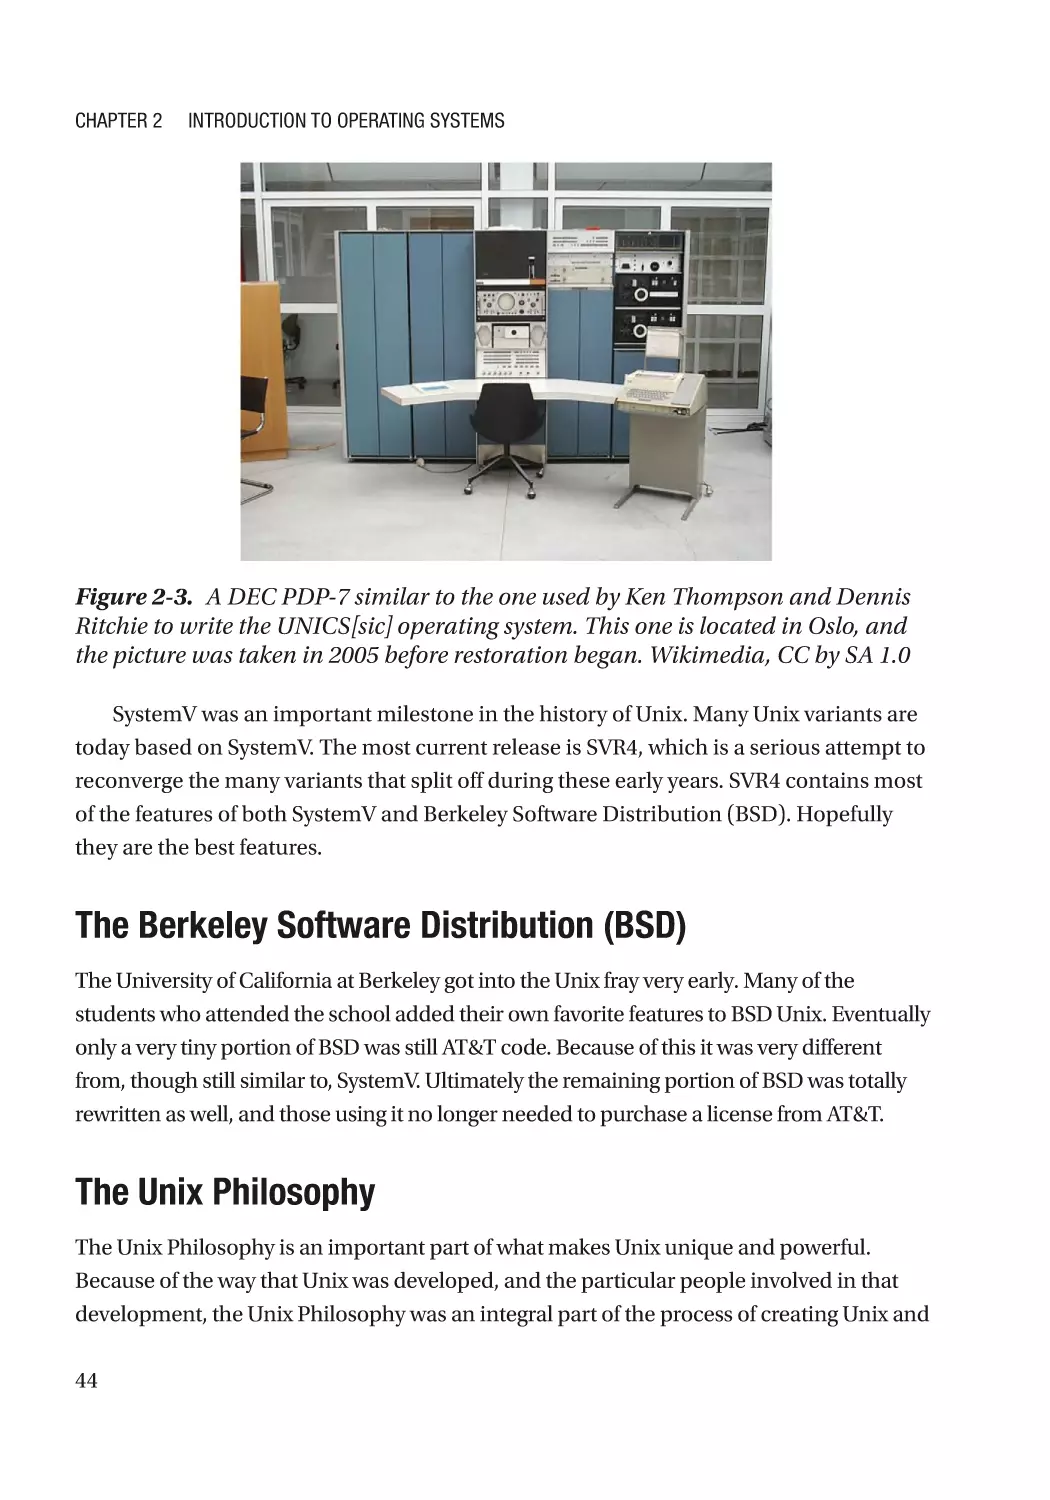 The Berkeley Software Distribution (BSD)
The Unix Philosophy